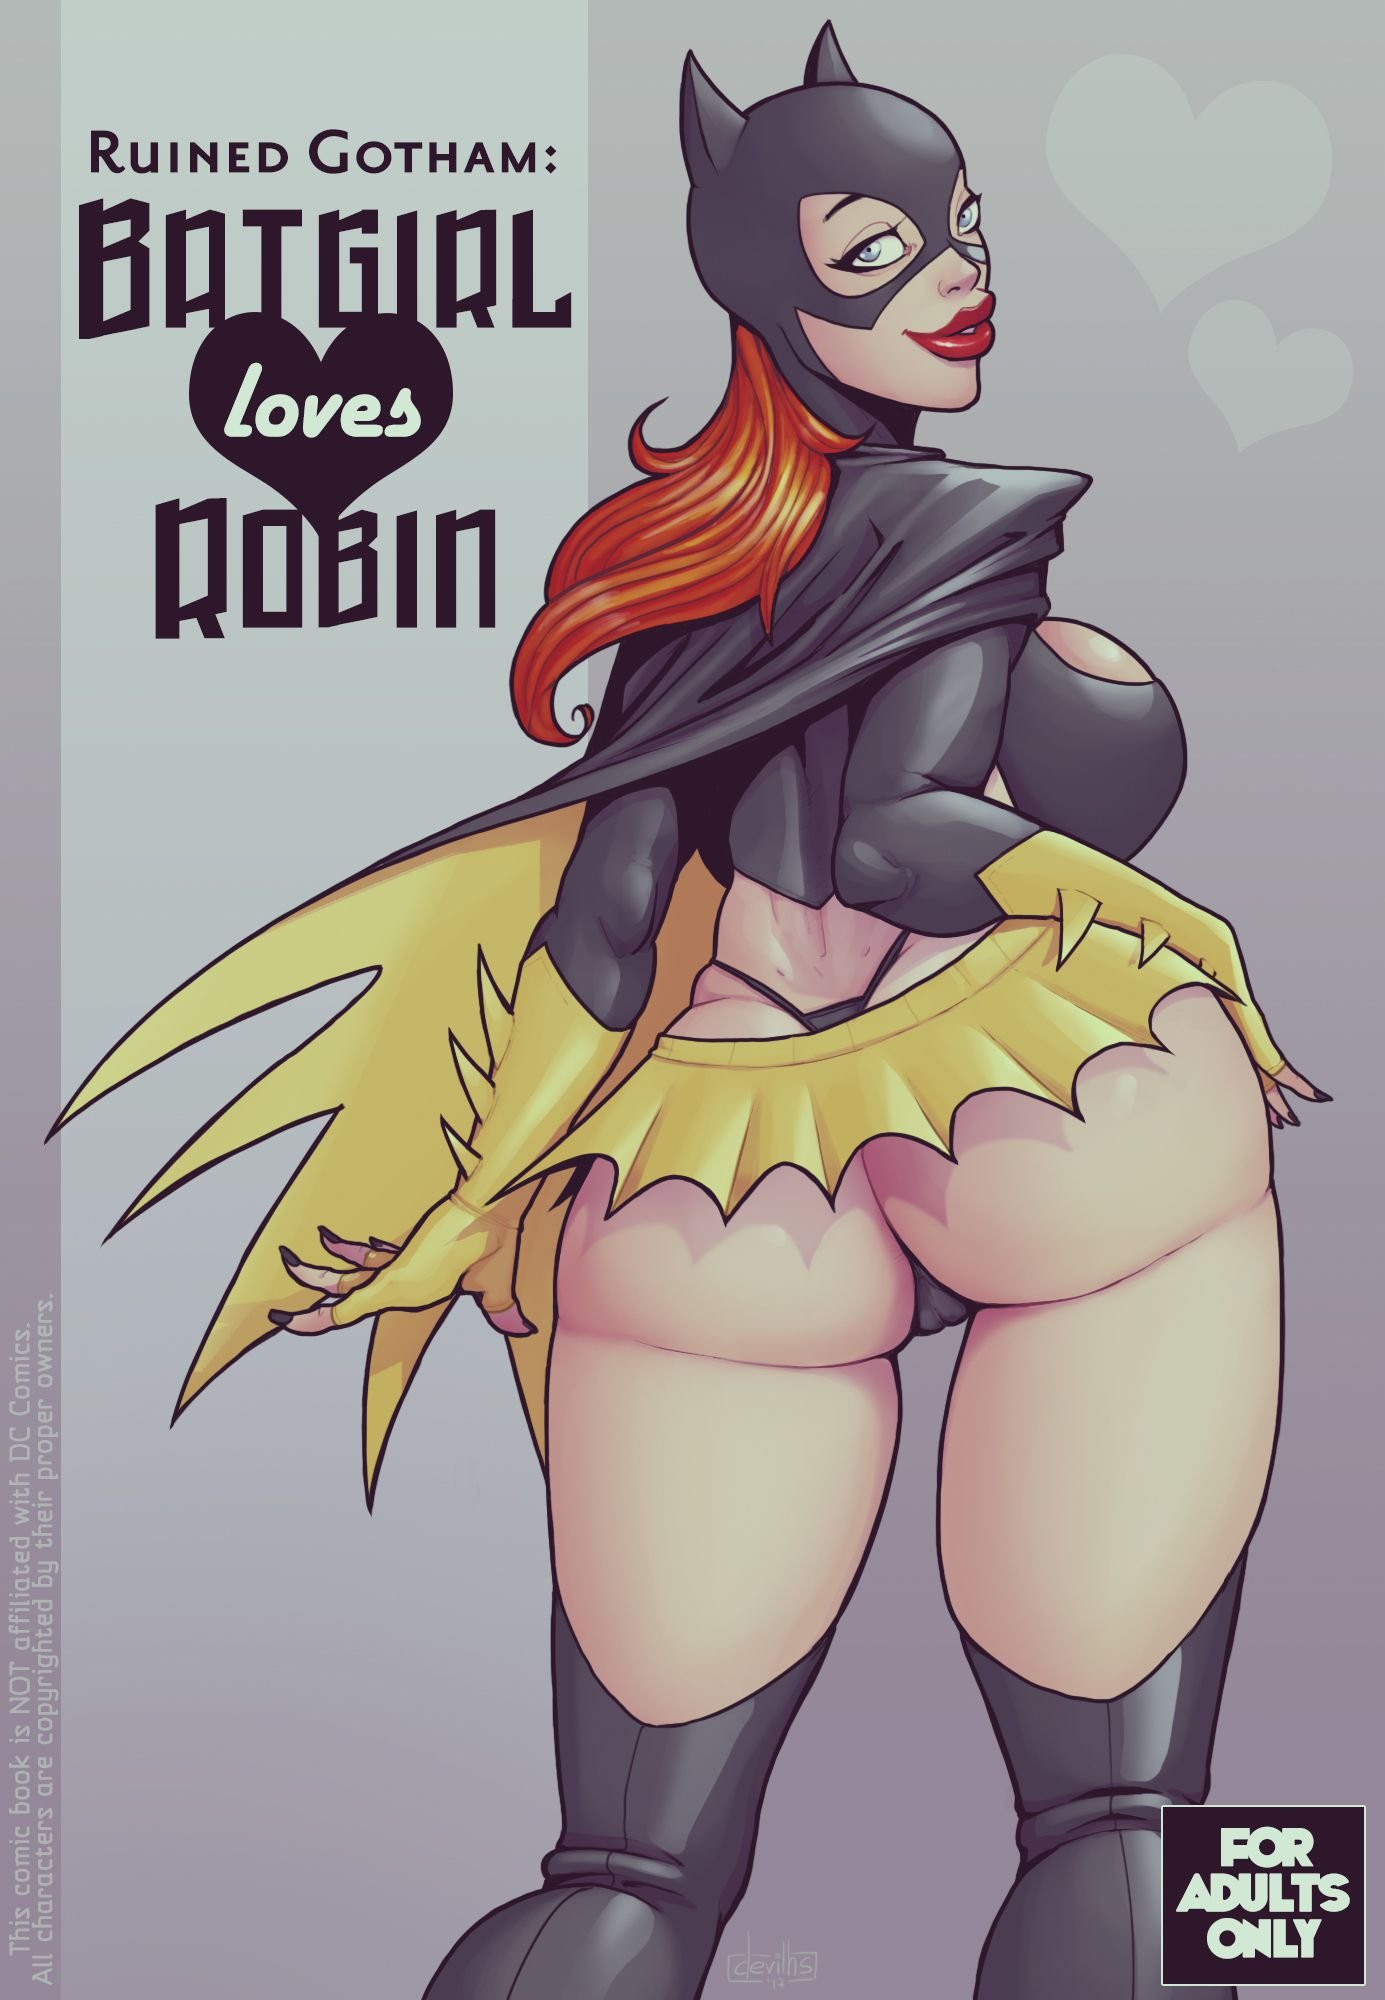 Ruined Gotham - Batgirl Loves Robin (Batman) DevilHS Porn Comic